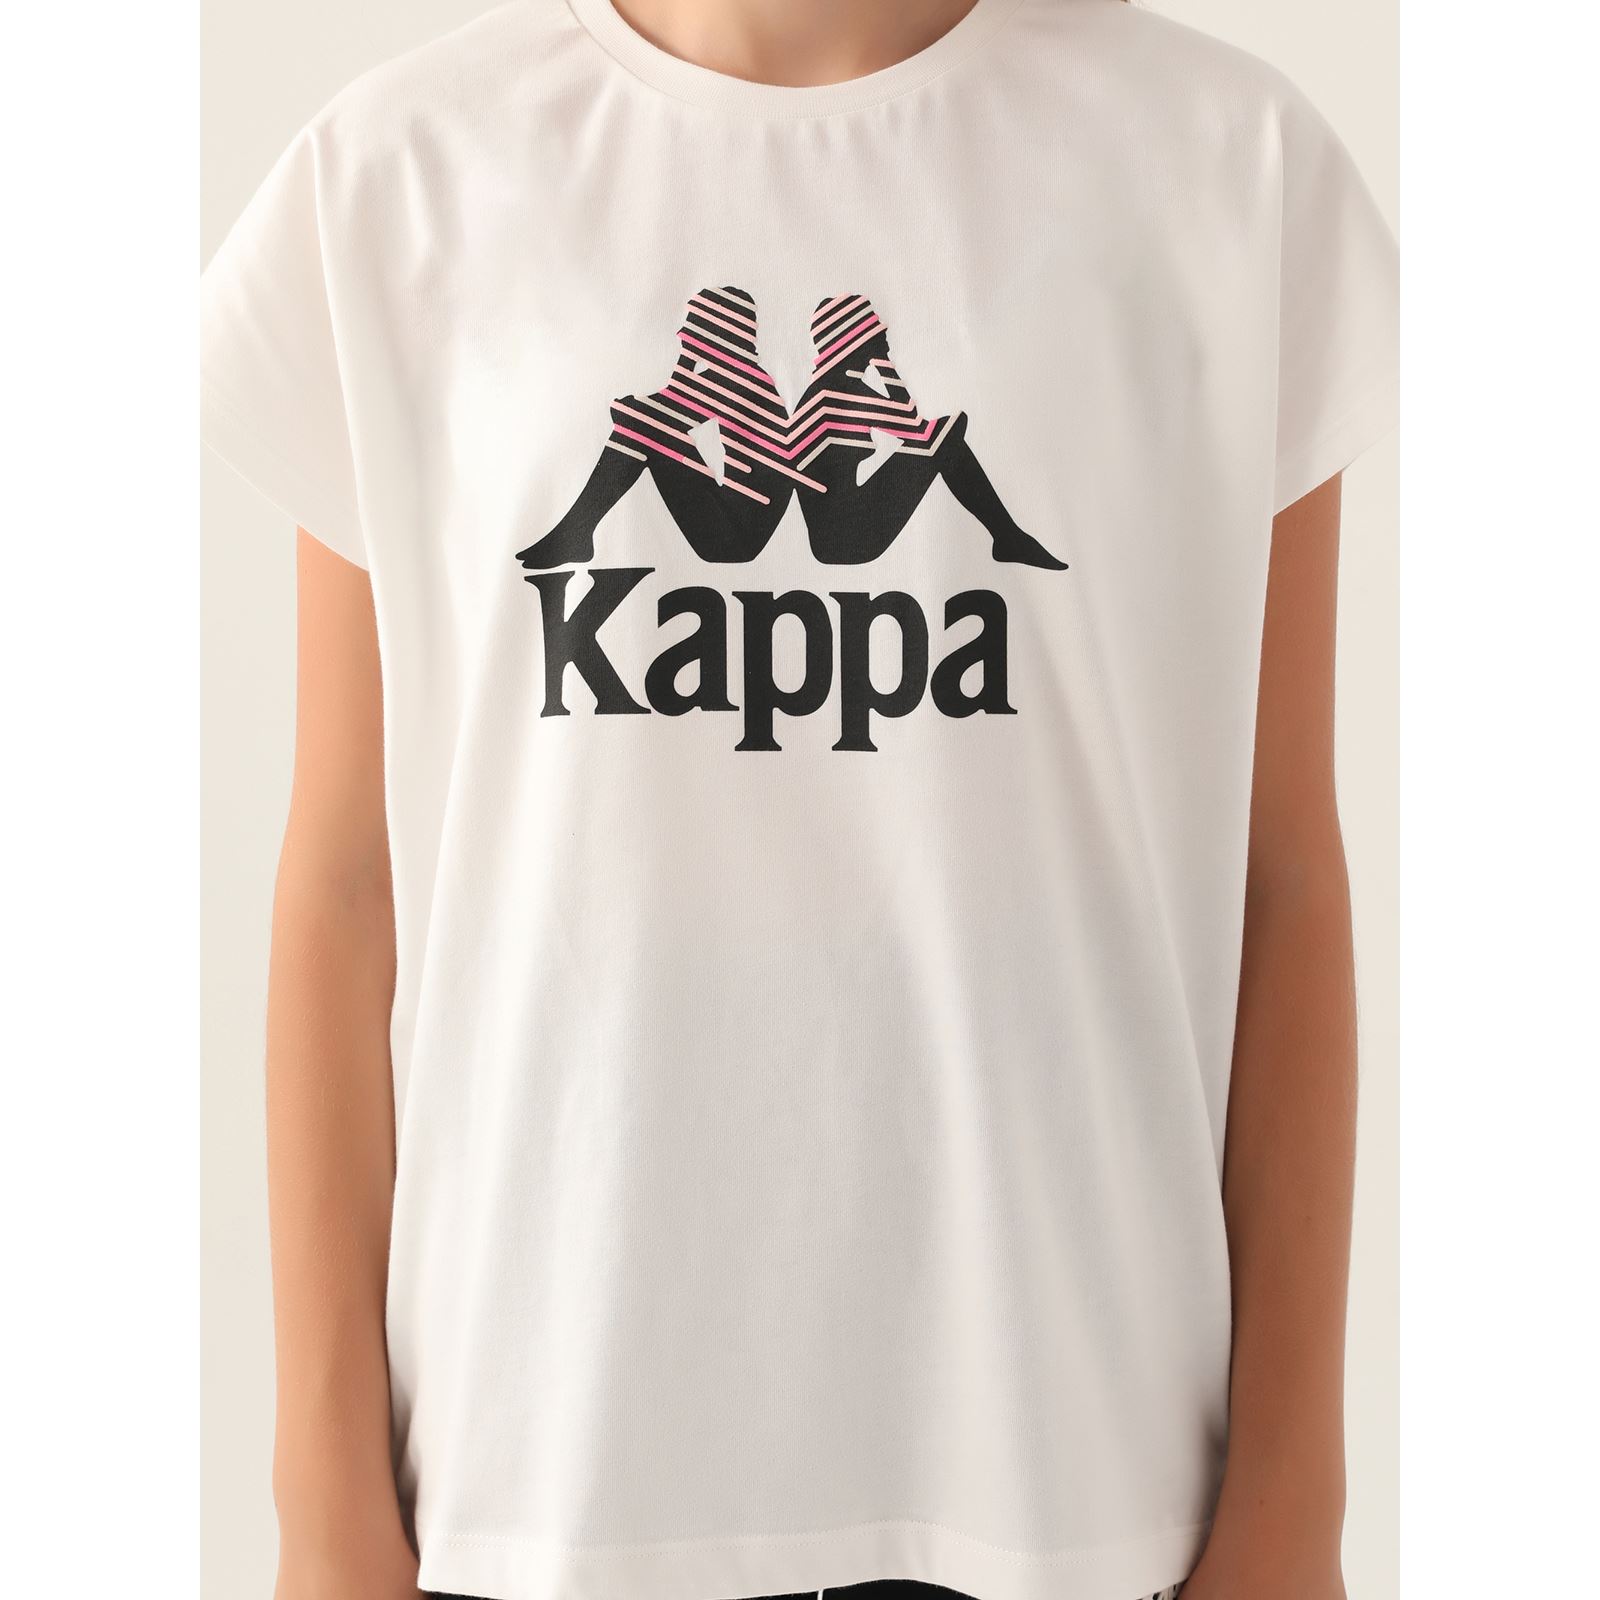 Kappa Kız Çocuk Tişört 5-15 Yaş Krem